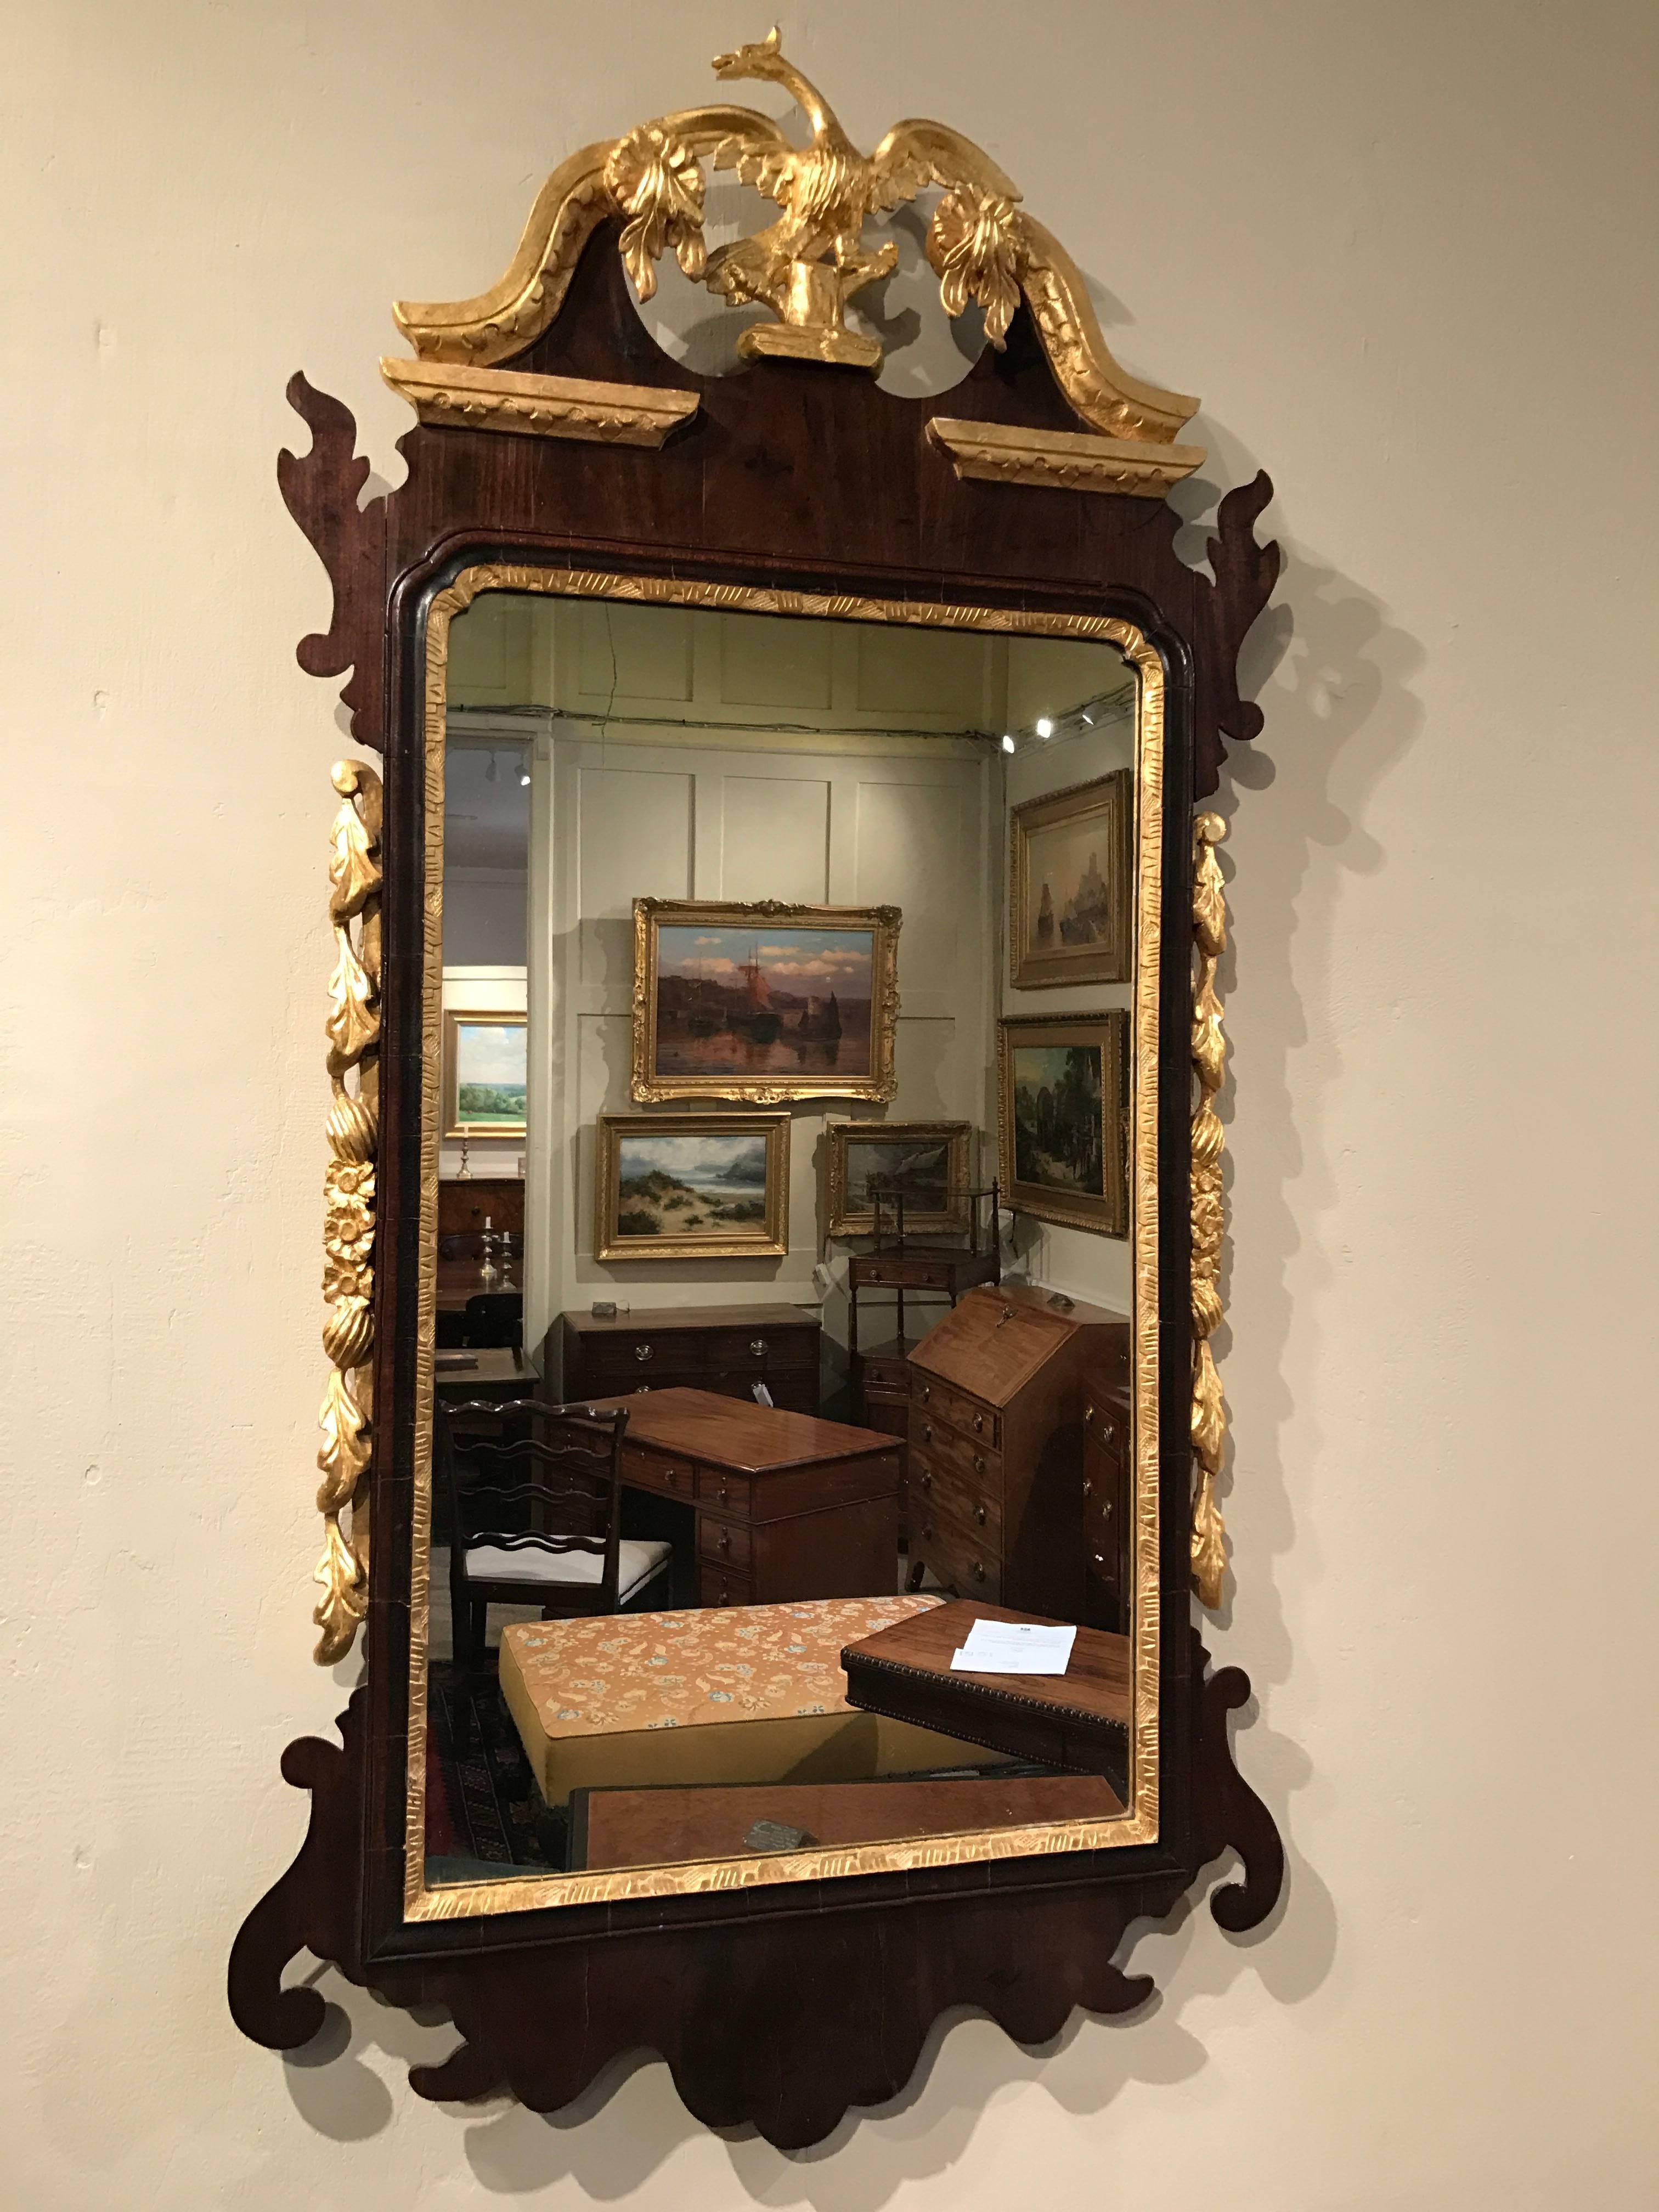 An elegant early Georgian style mahogany and gilt wall mirror with a ho-ho bird crest.